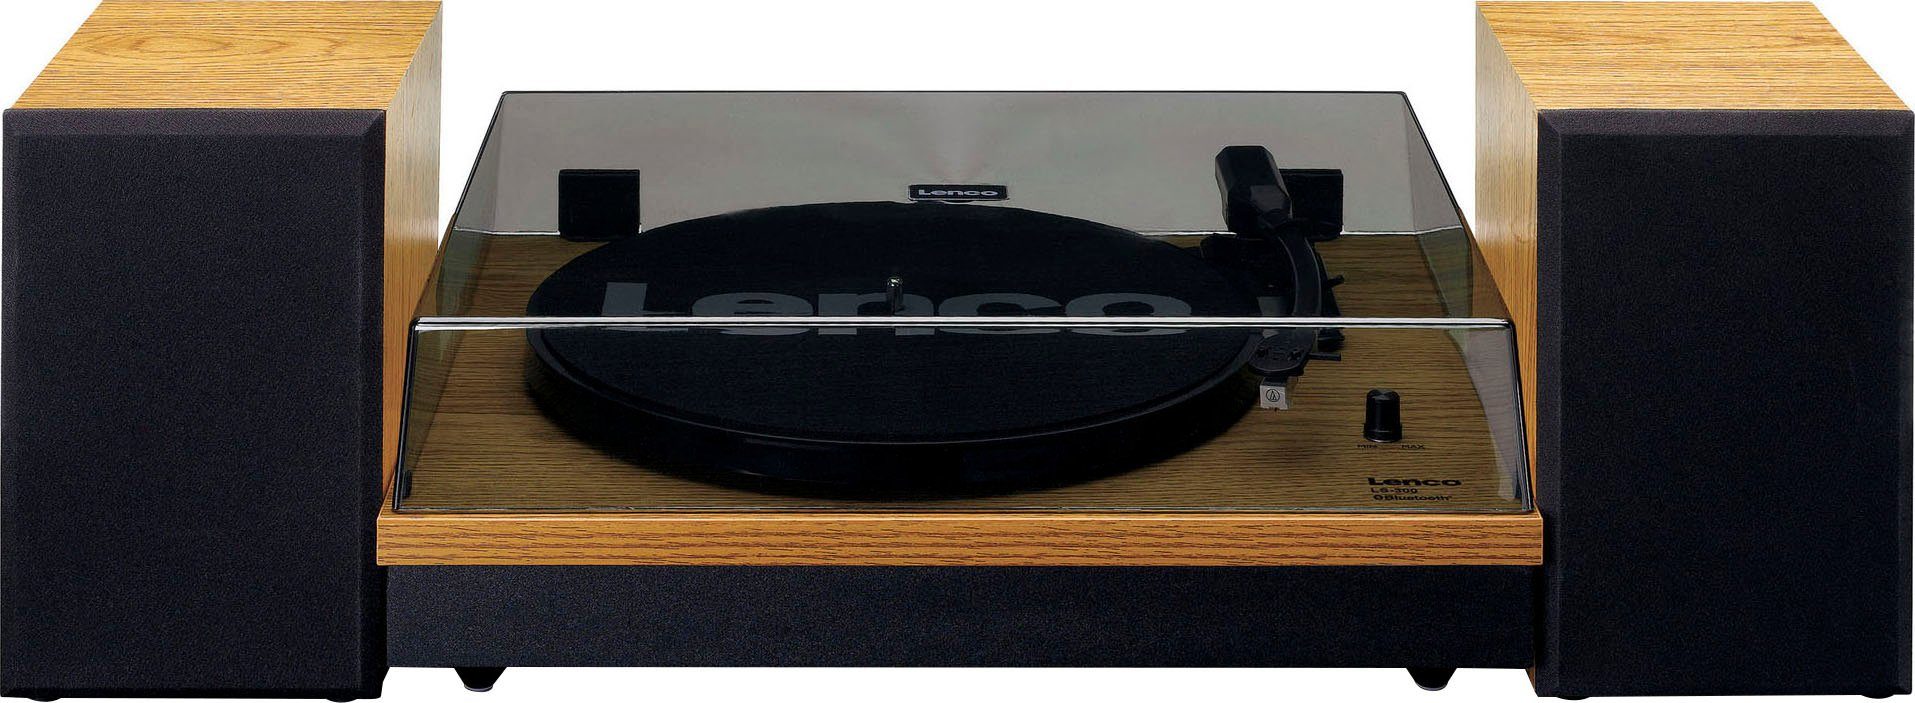 Lenco LS-300WD Plattenspieler Lautsprechern ext. Holz mit (Riemenantrieb) Plattenspieler